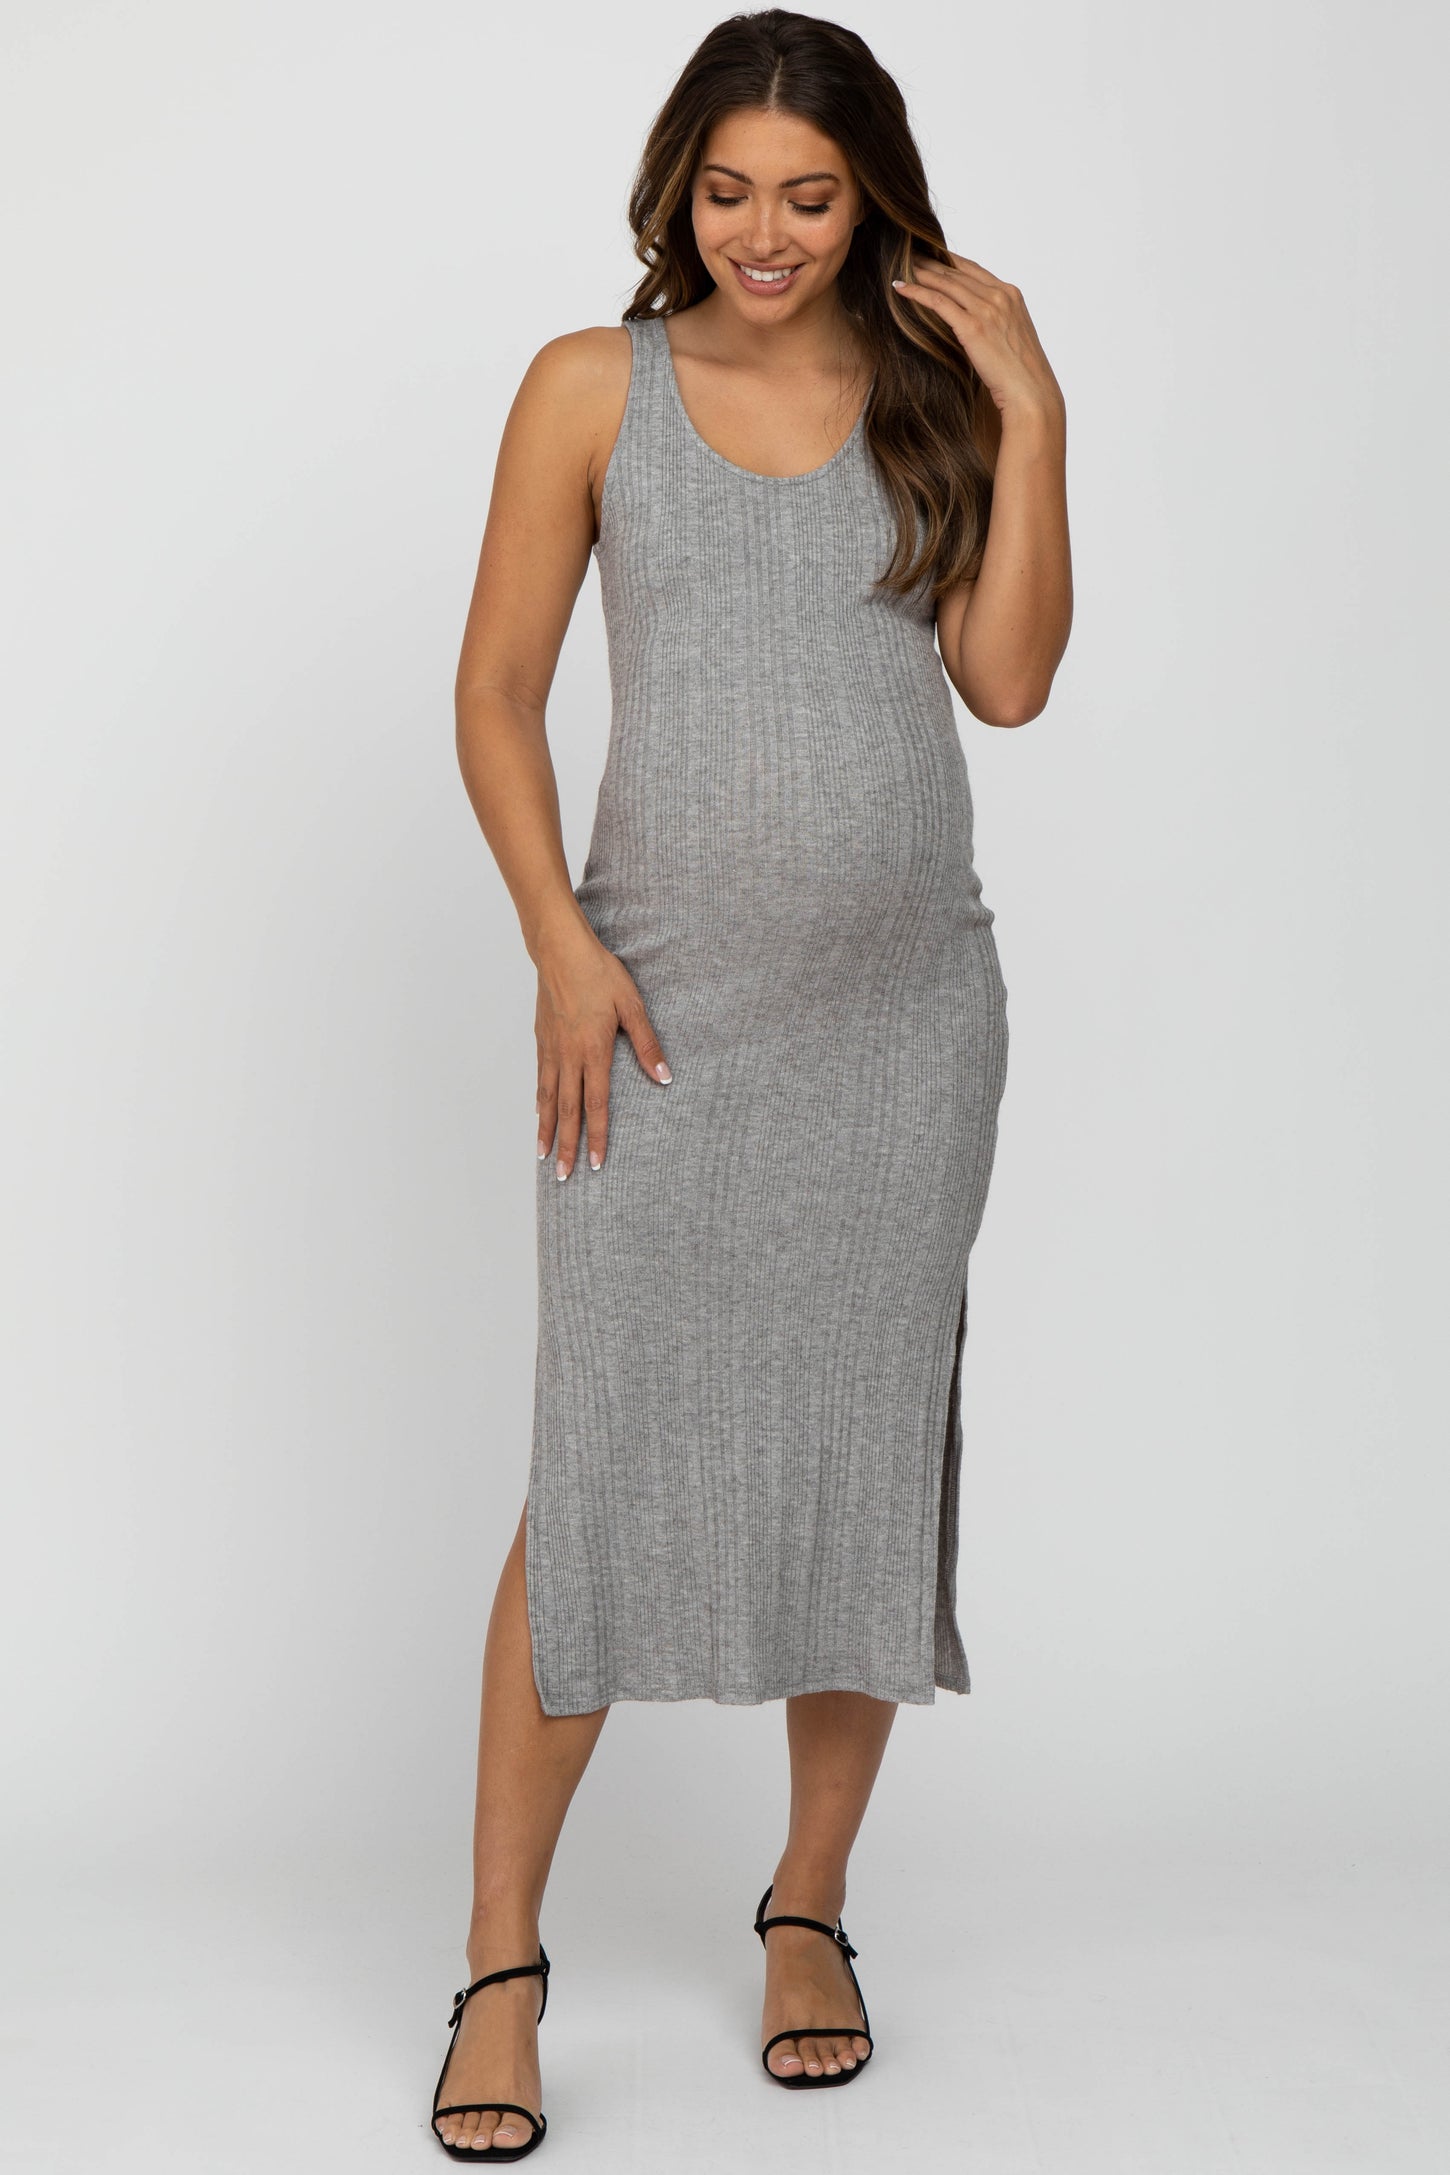 Heather Grey Sleeveless Ribbed Side Slit Maternity Dress